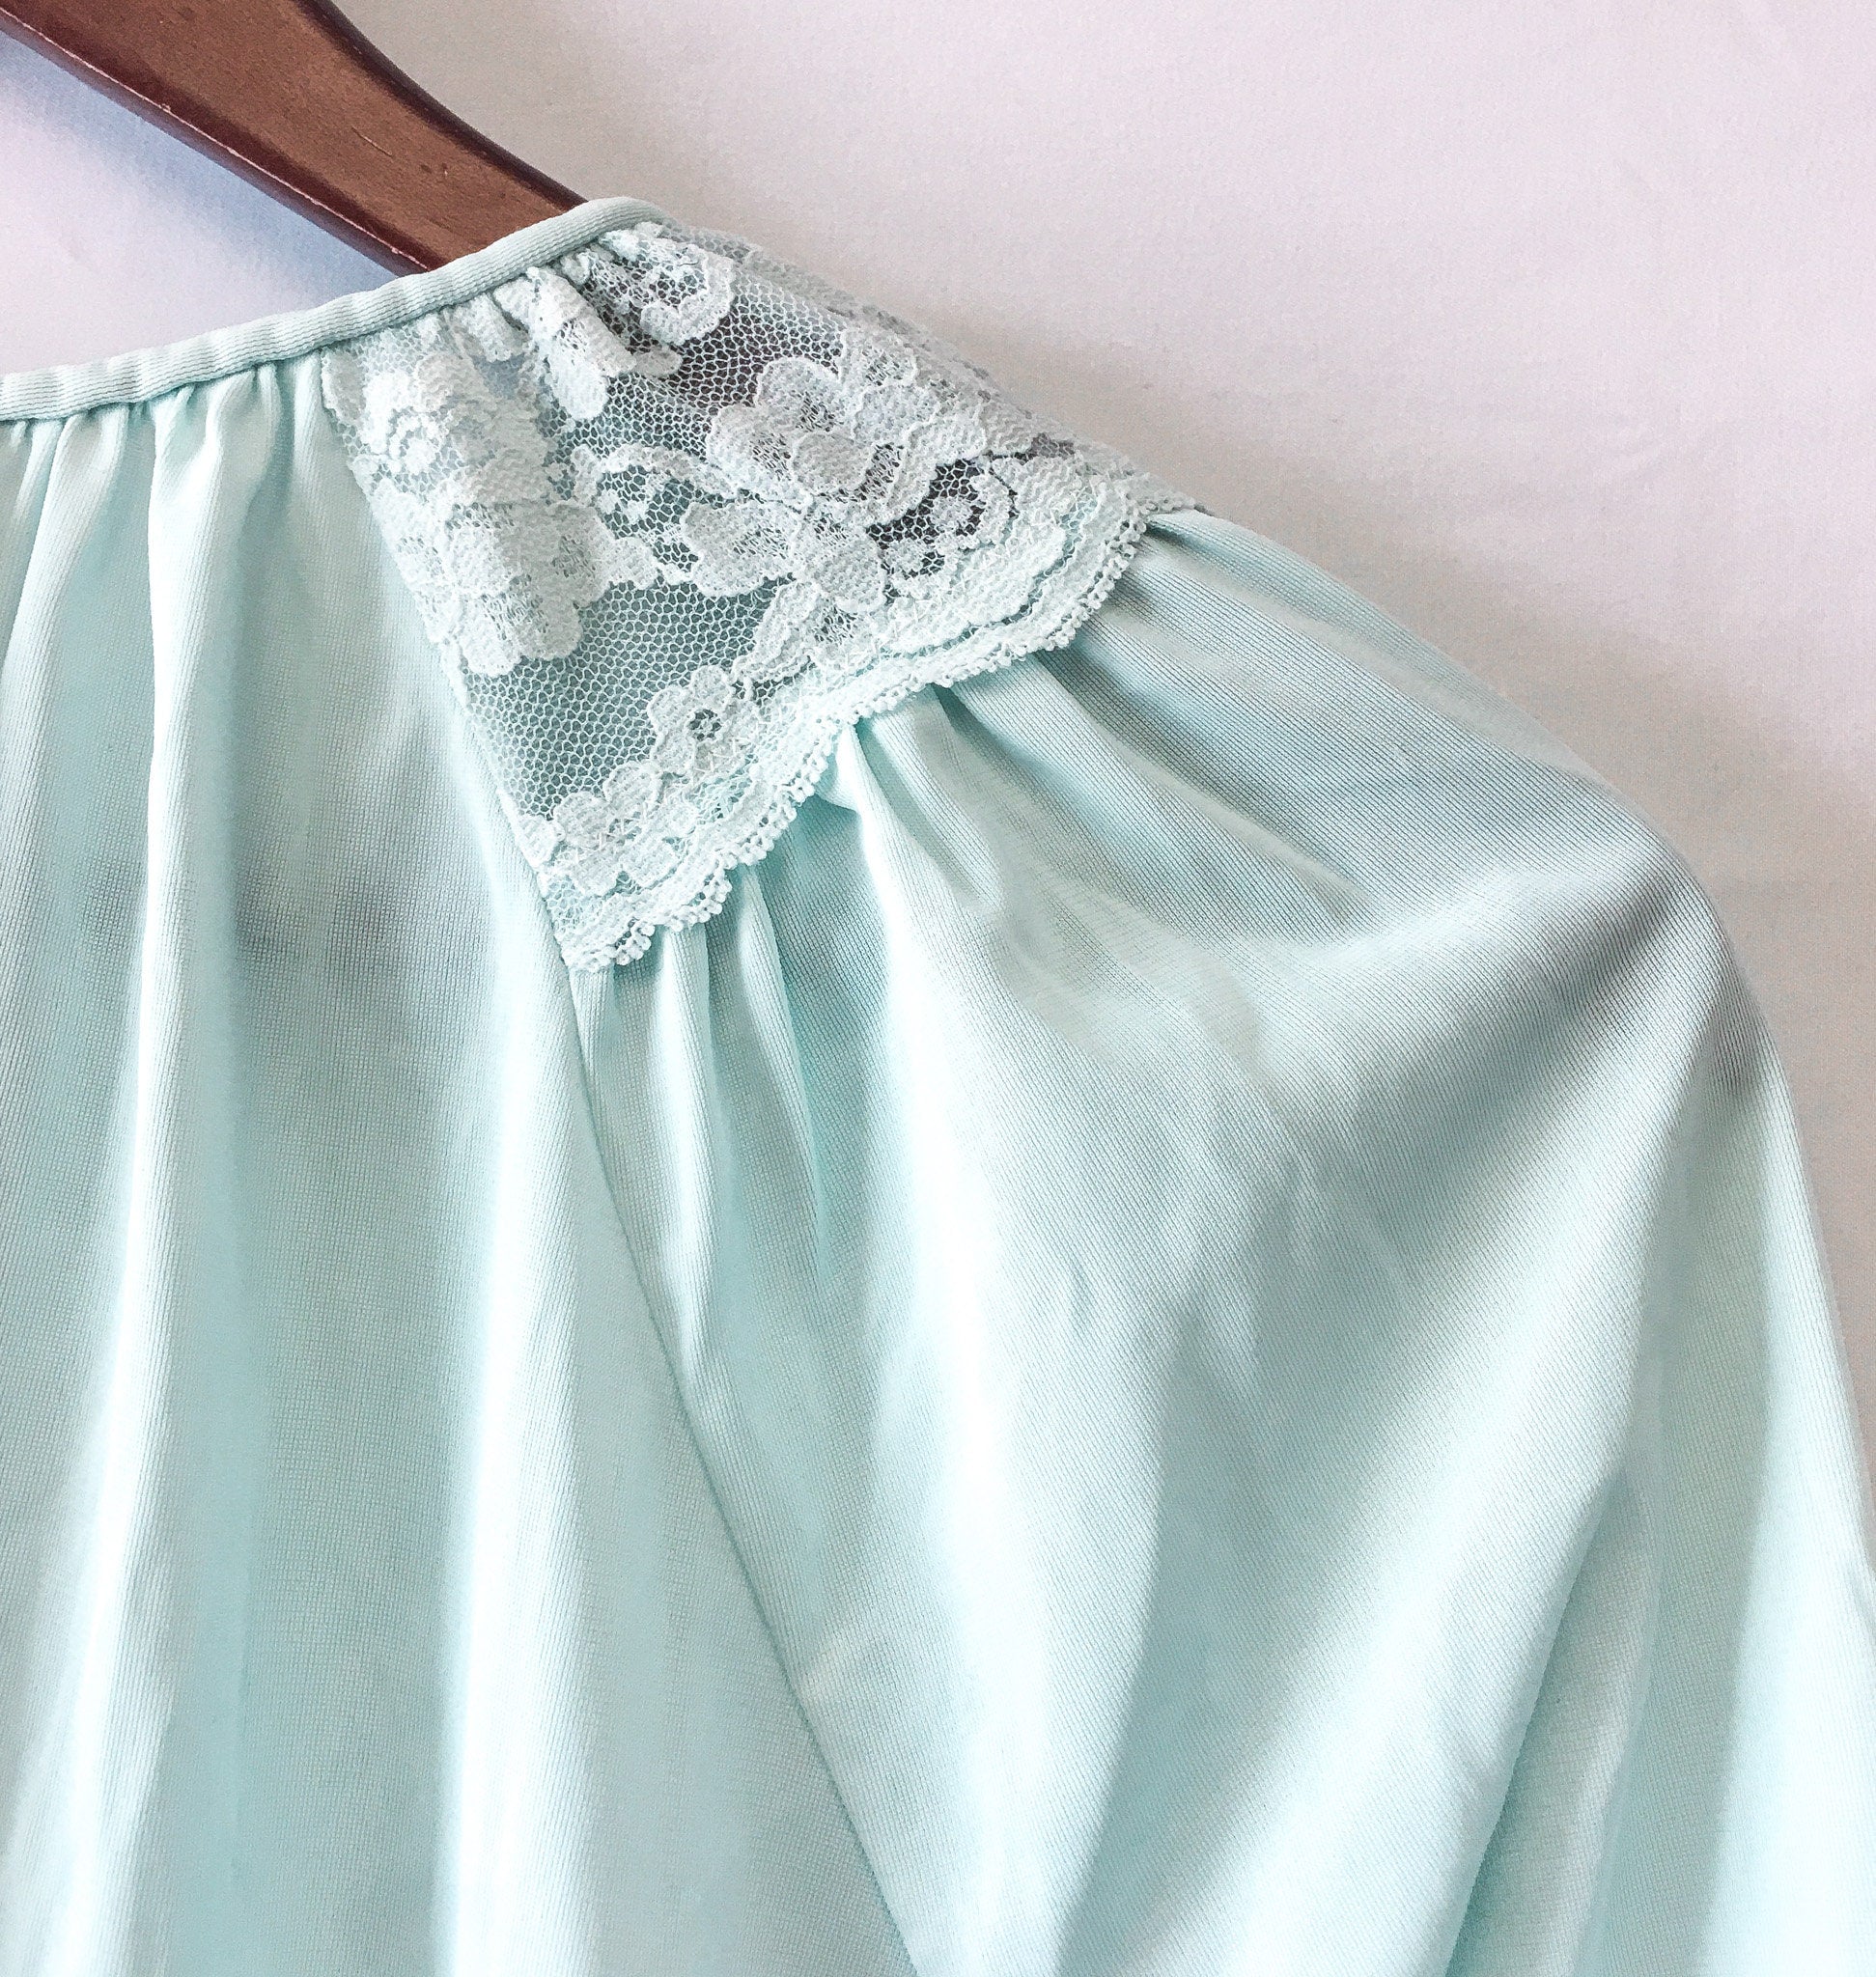 Vintage Teal Sleeved Slip Dress with Lace Detail, Sz. L, Vintage Peignoir Dress